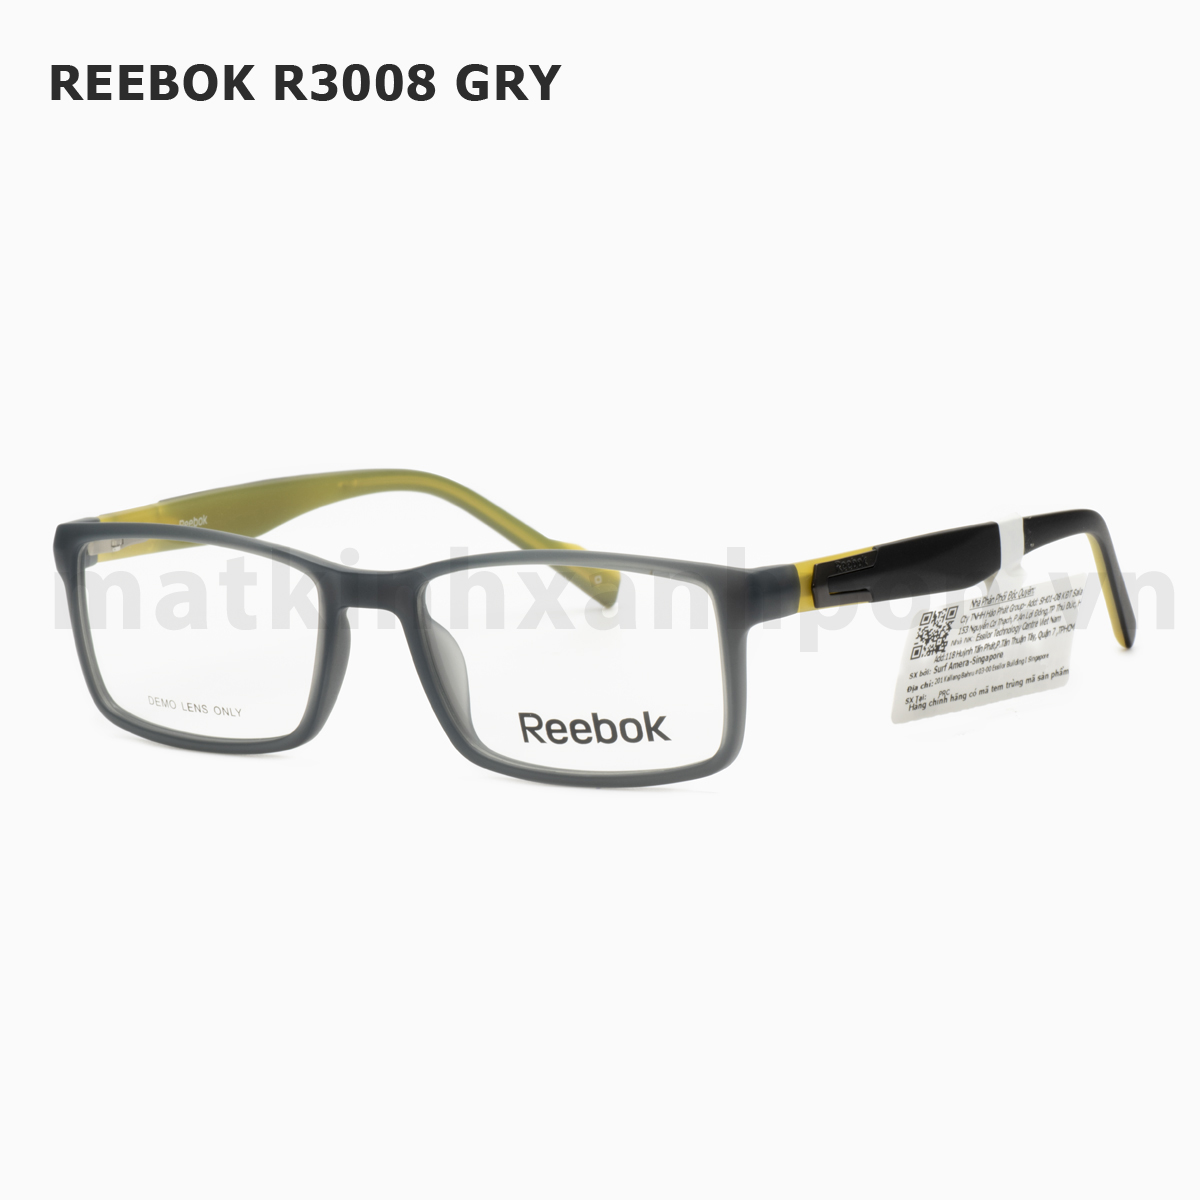 Reebok R3008 GRY